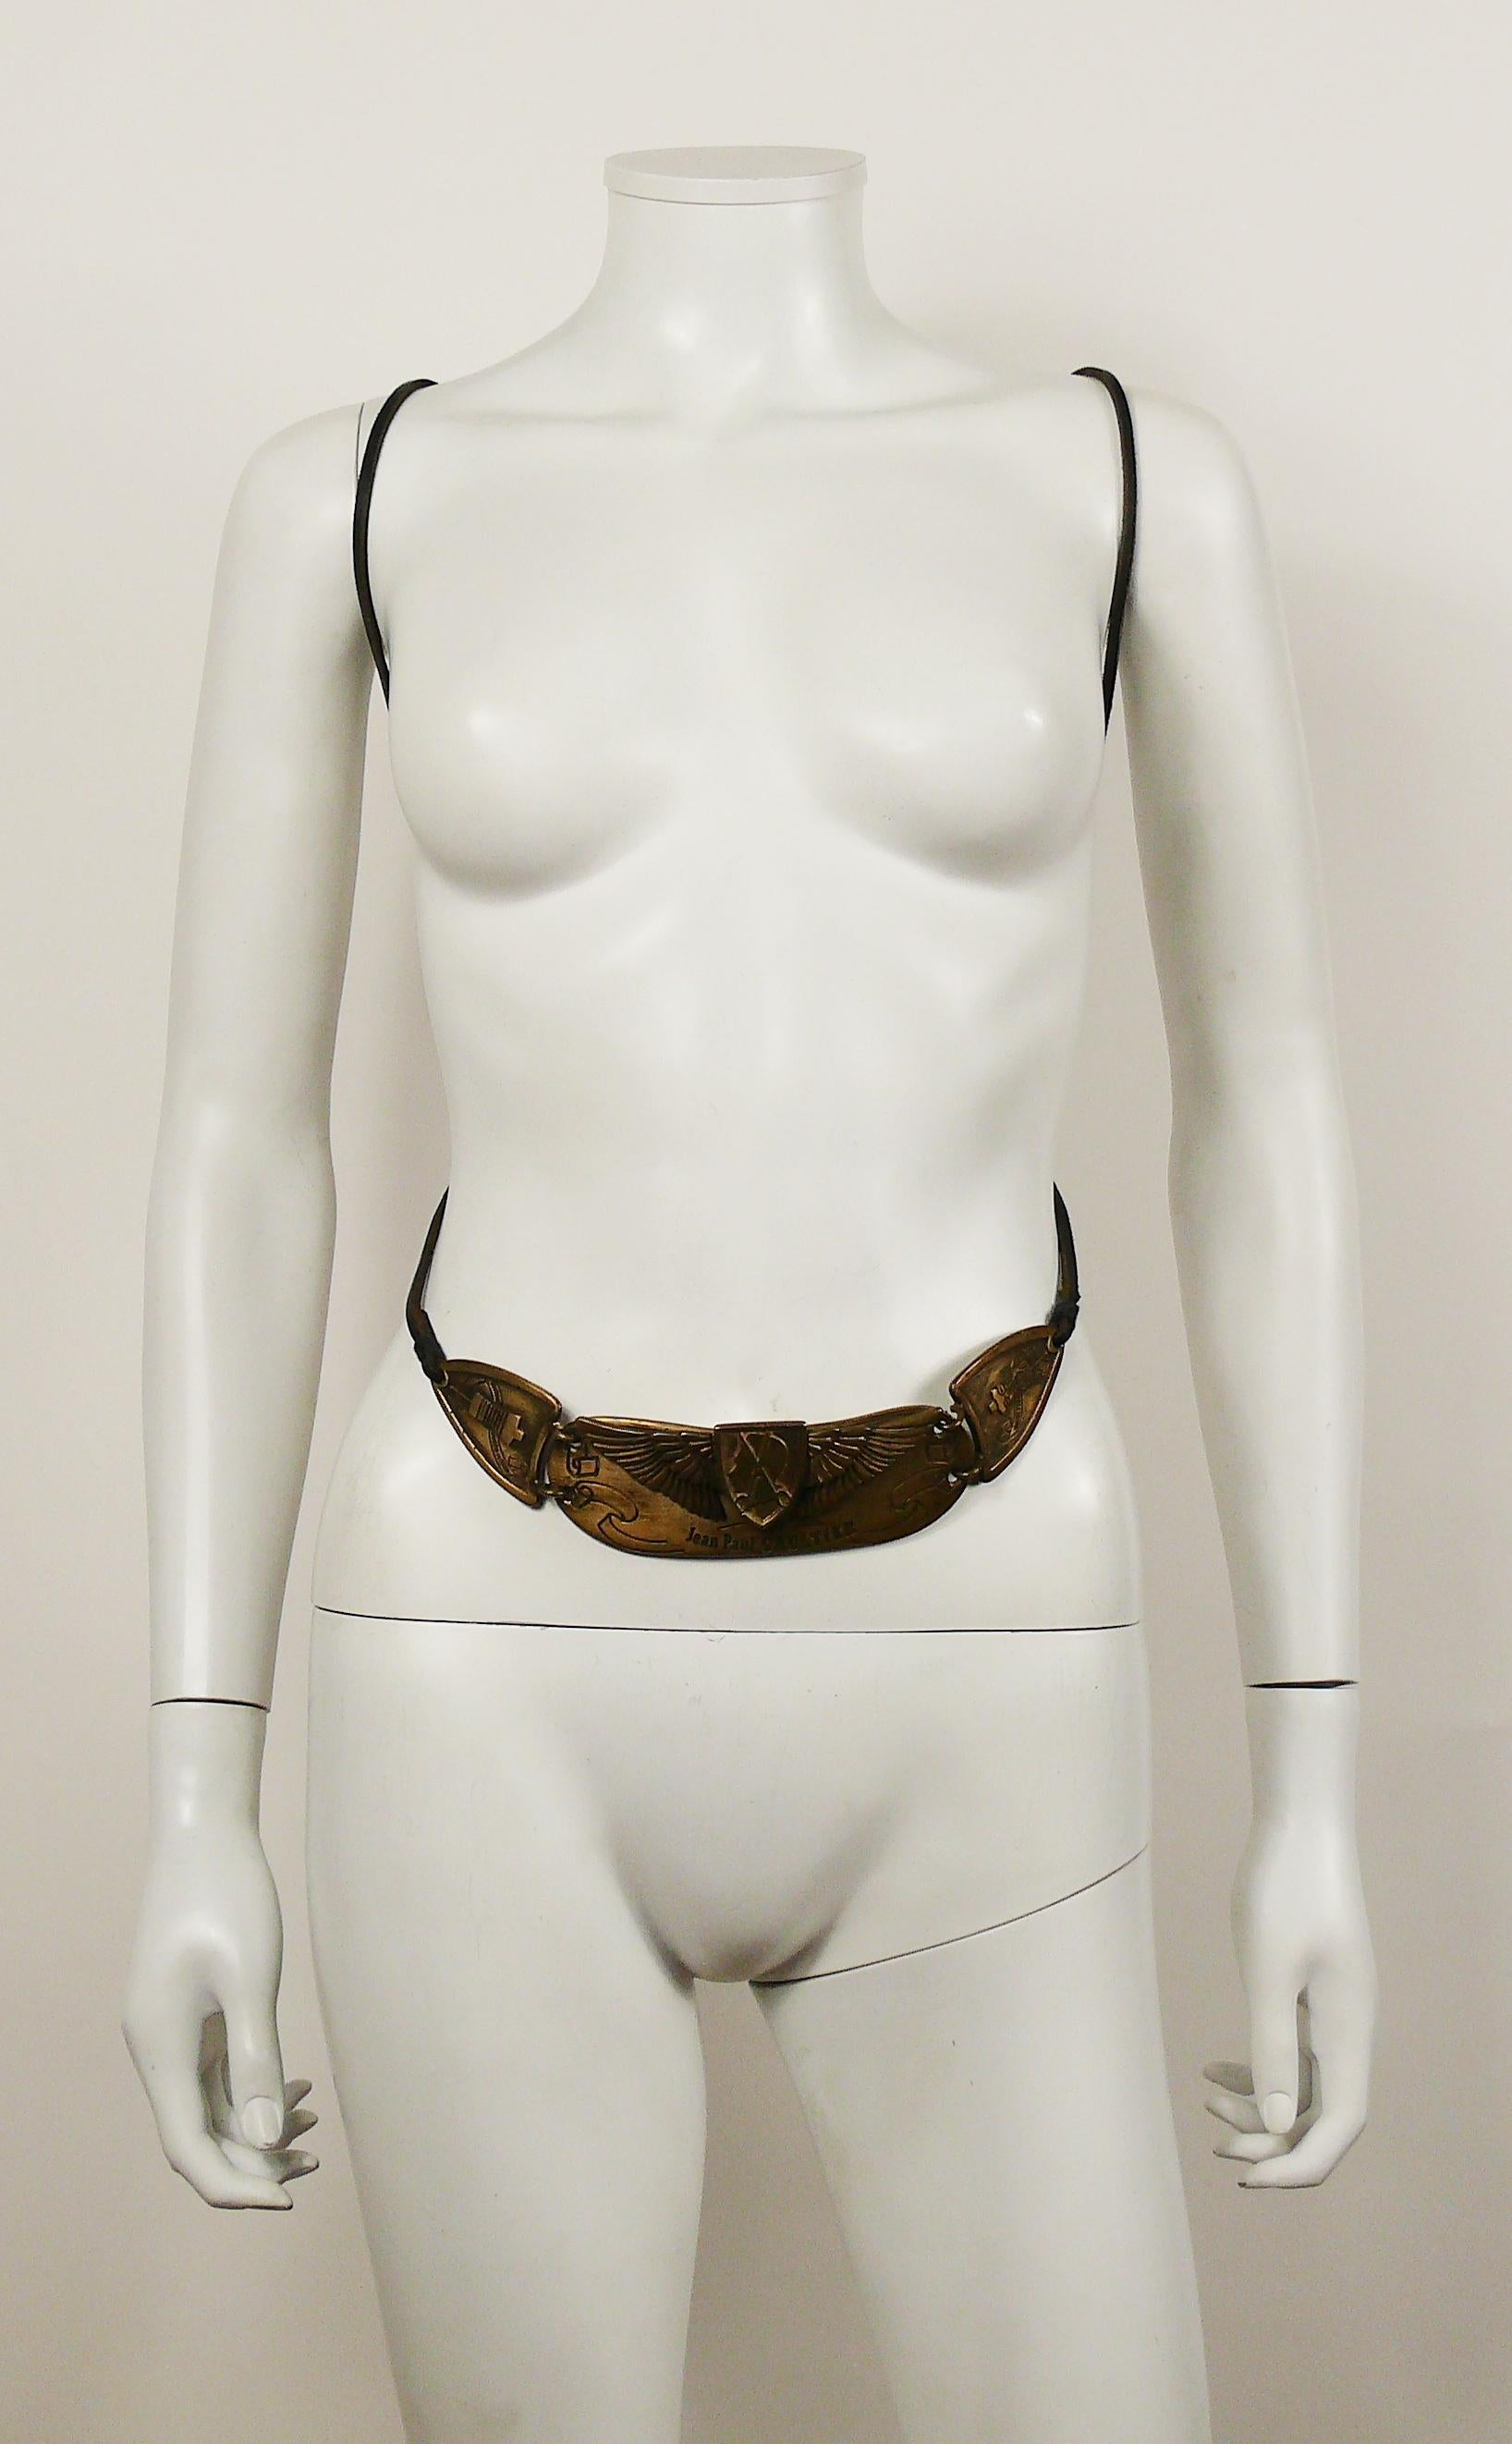 Jean Paul Gaultier Limited Edition Belt 